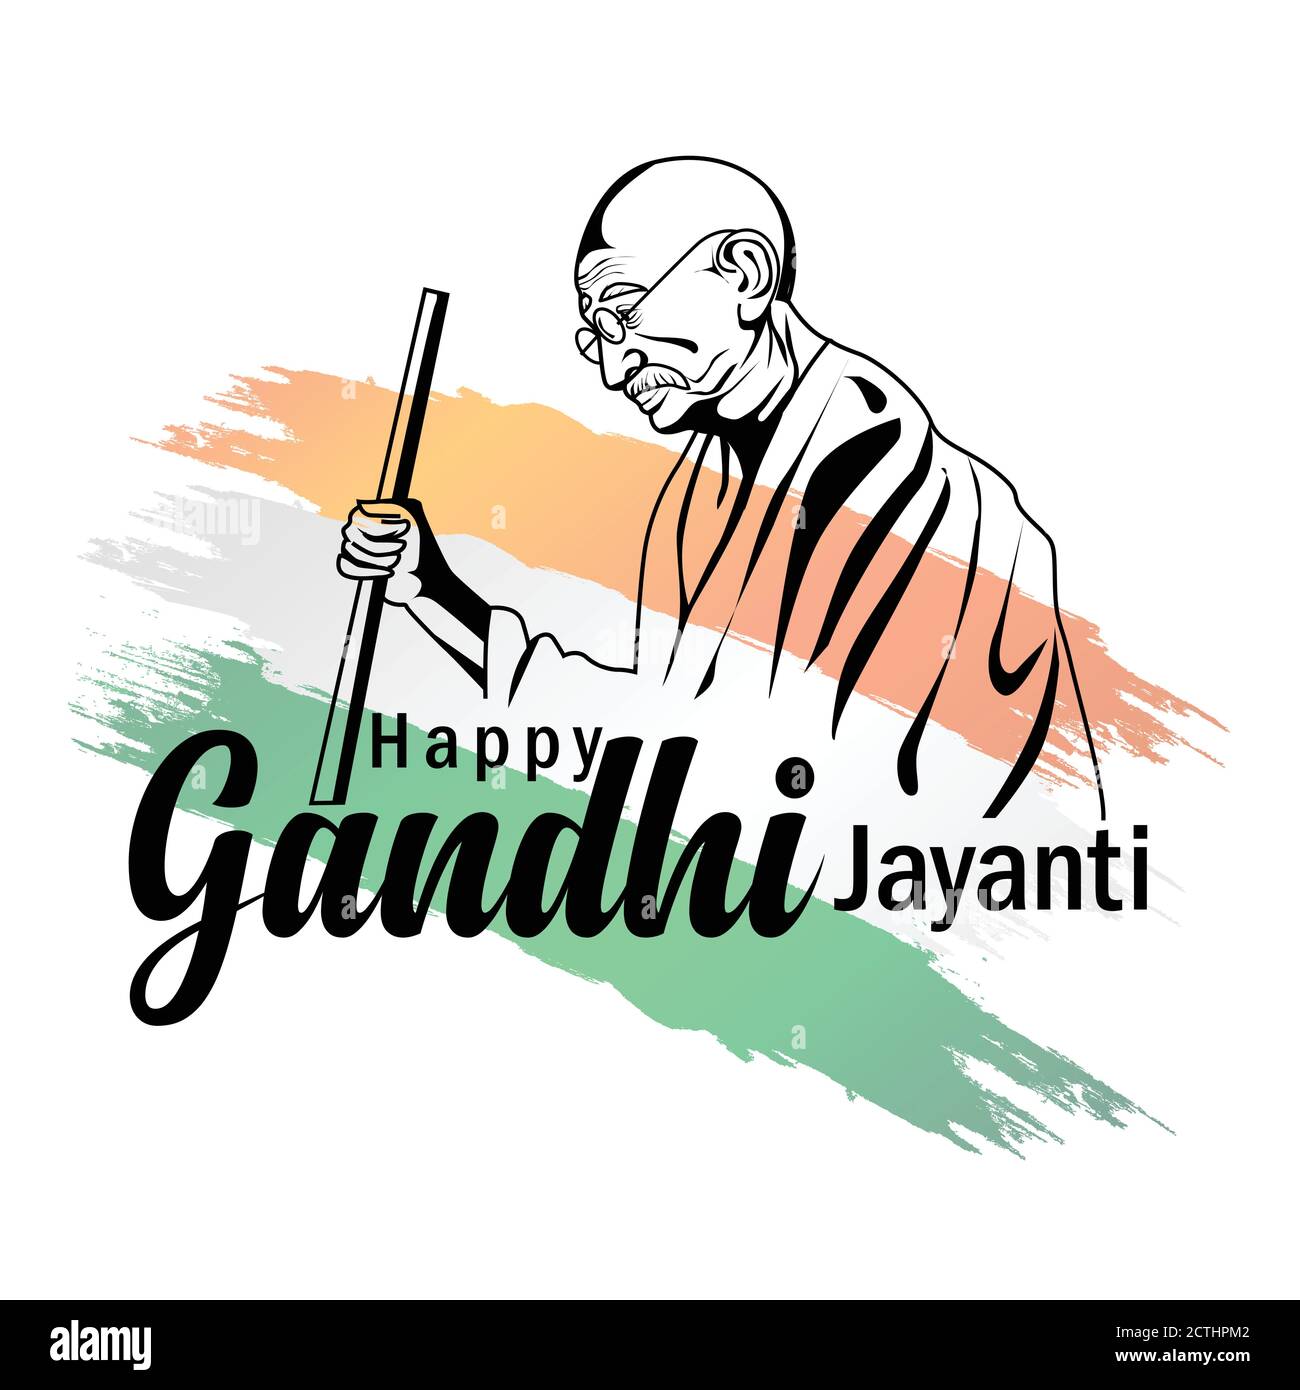 Mahatma Gandhi jayanti - 2020. 2nd October with creative design vector illustration, Mohandas Karam Chandra Gandhi Birthday. Stock Vector